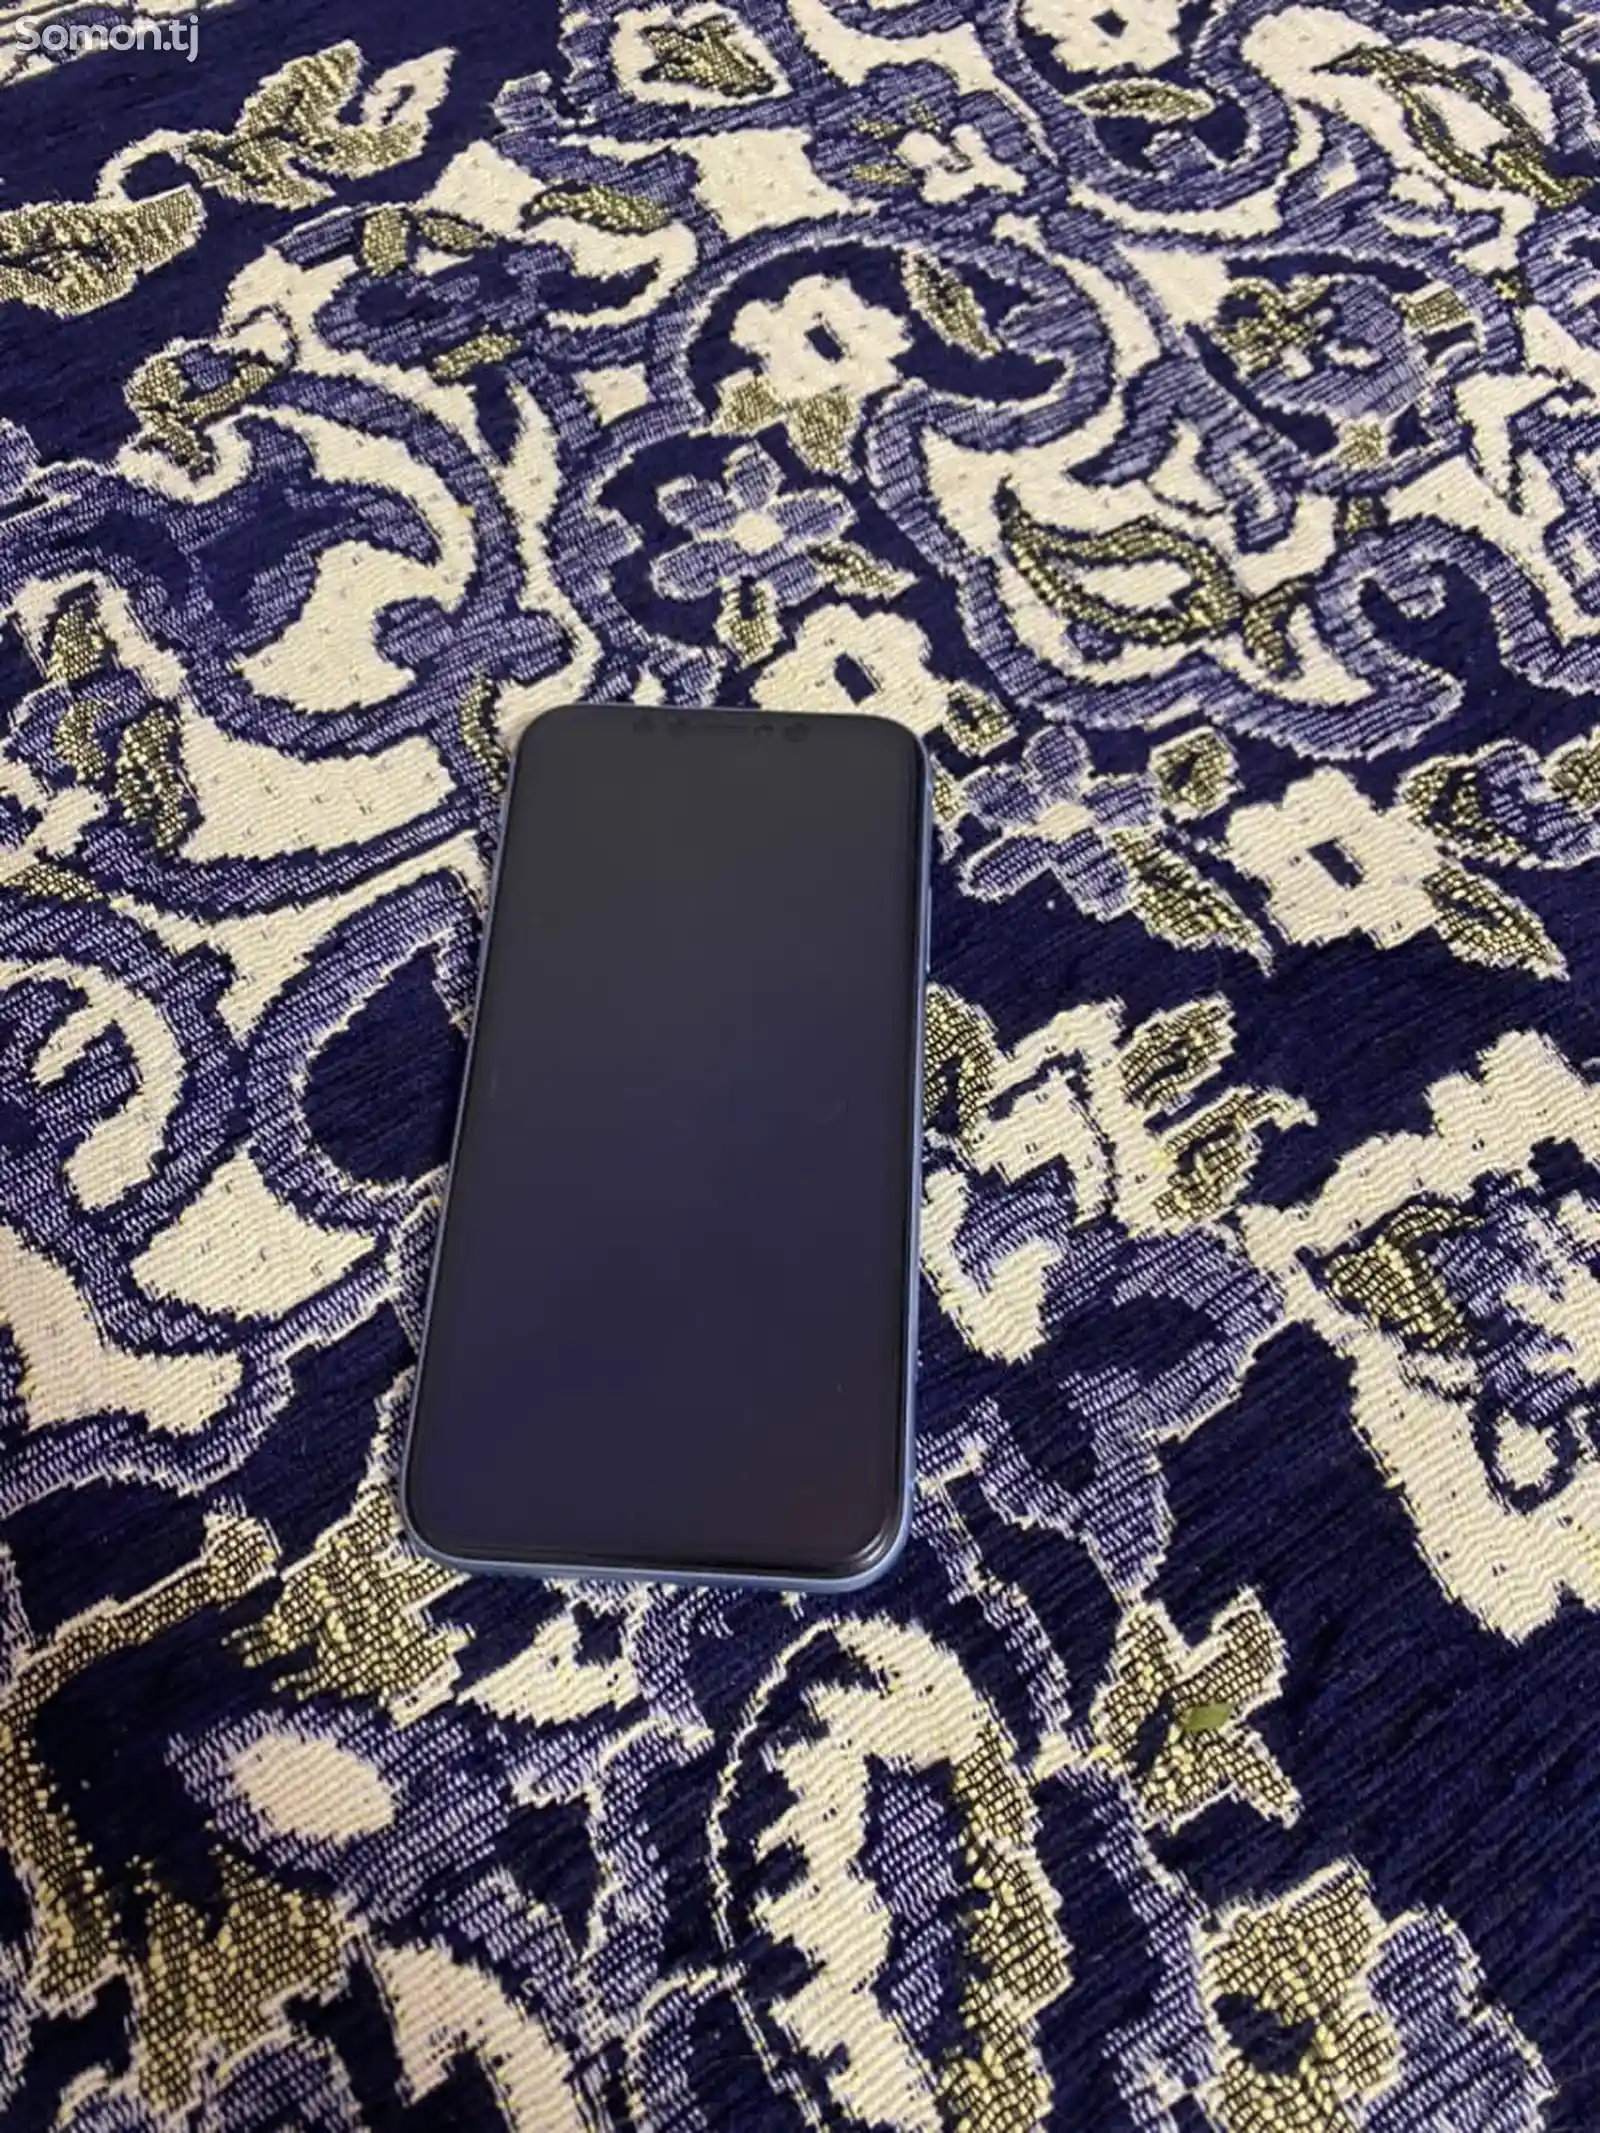 Apple iPhone Xr, 64 gb, Blue-5